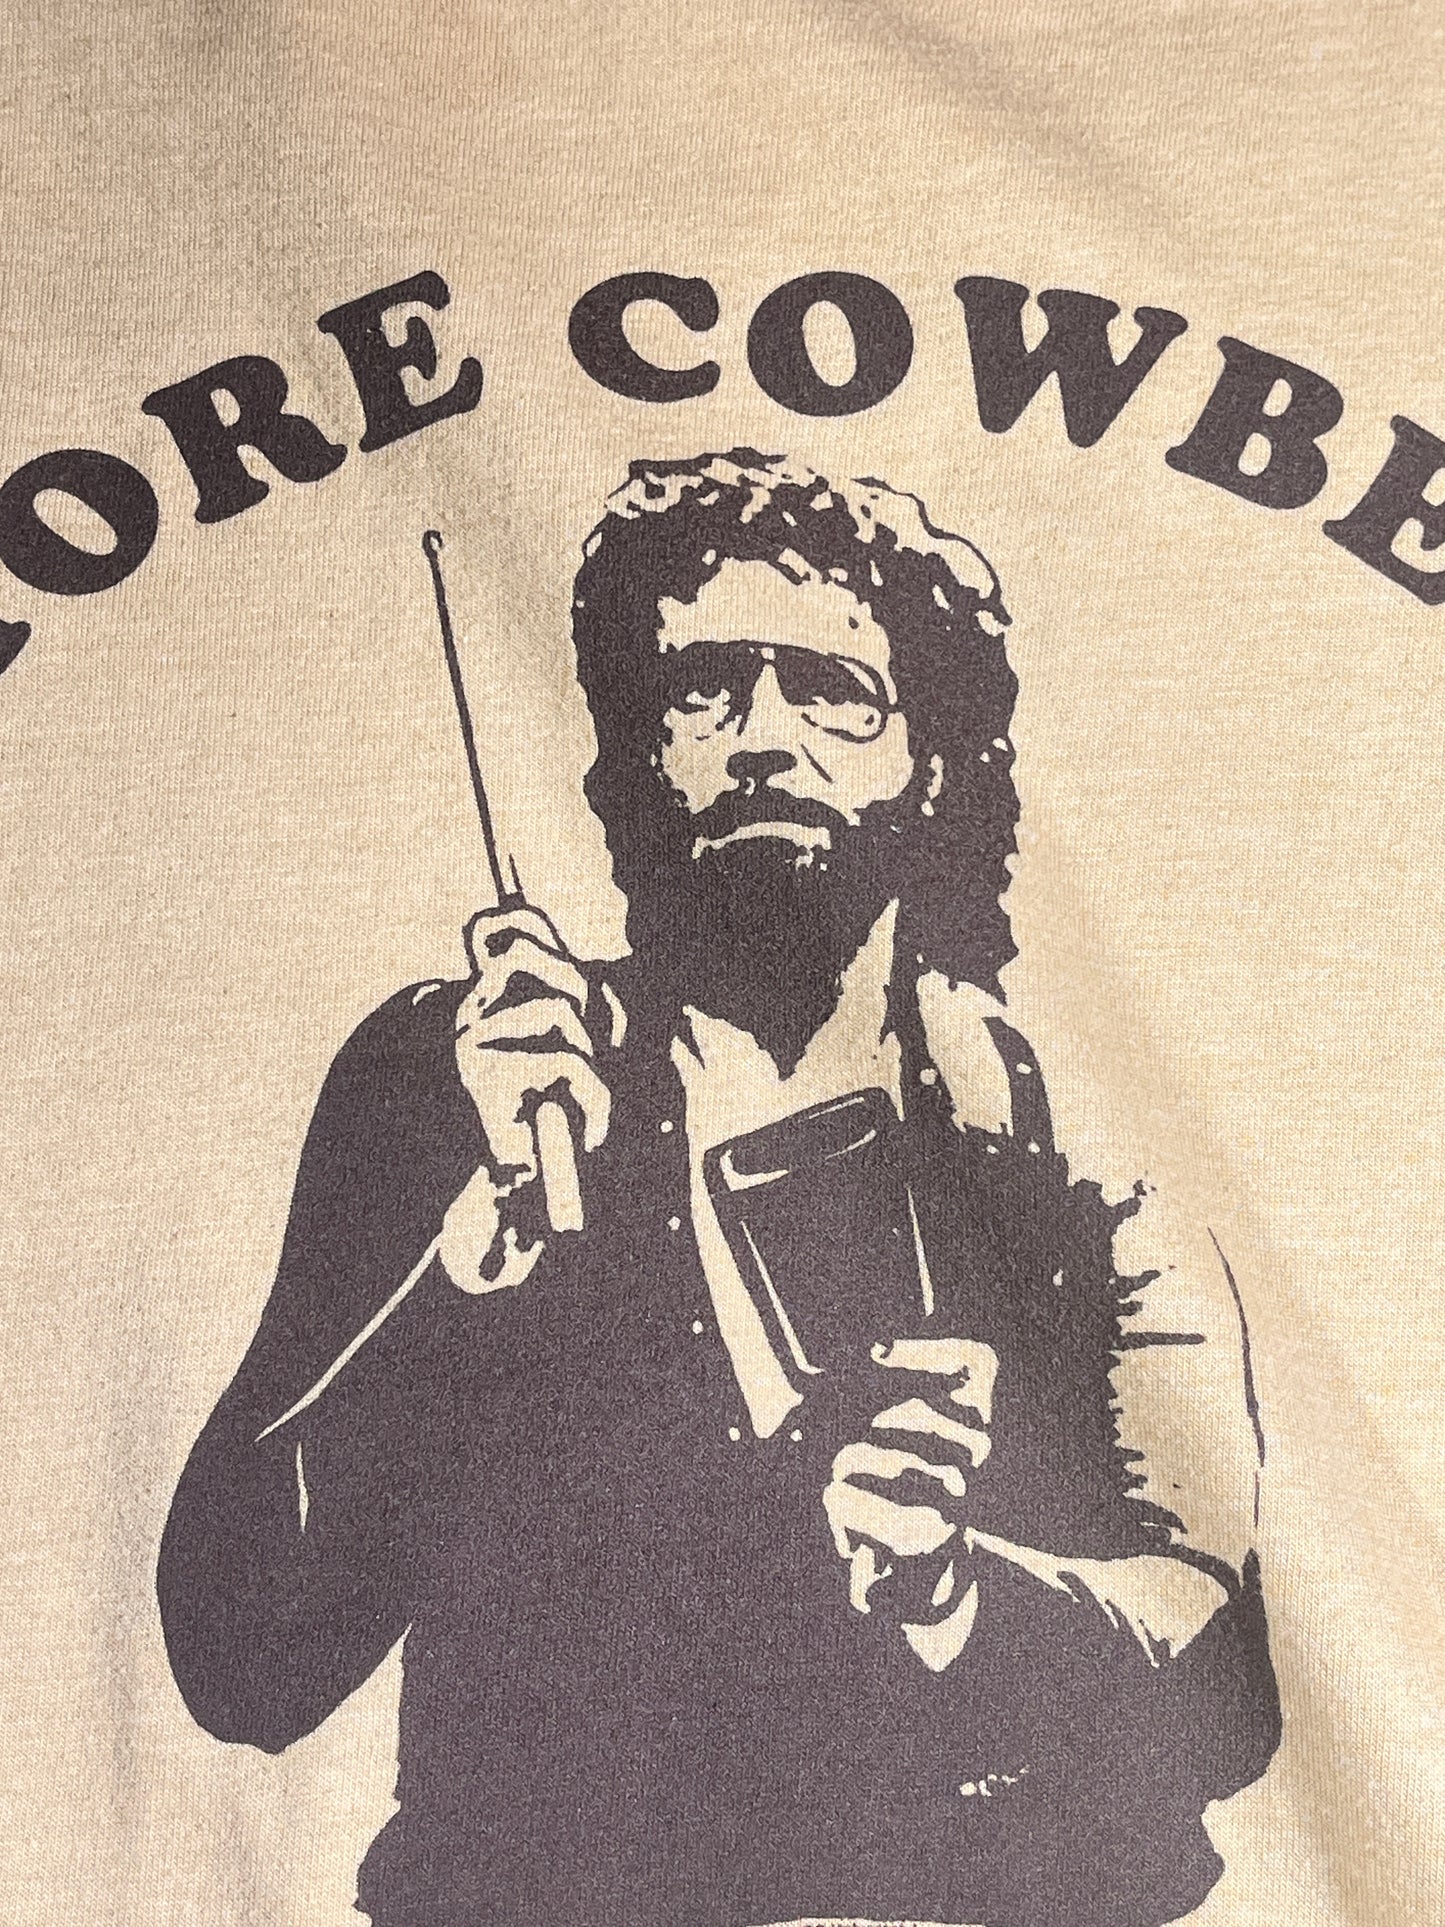 Vintage More Cowbell T-Shirt SNL